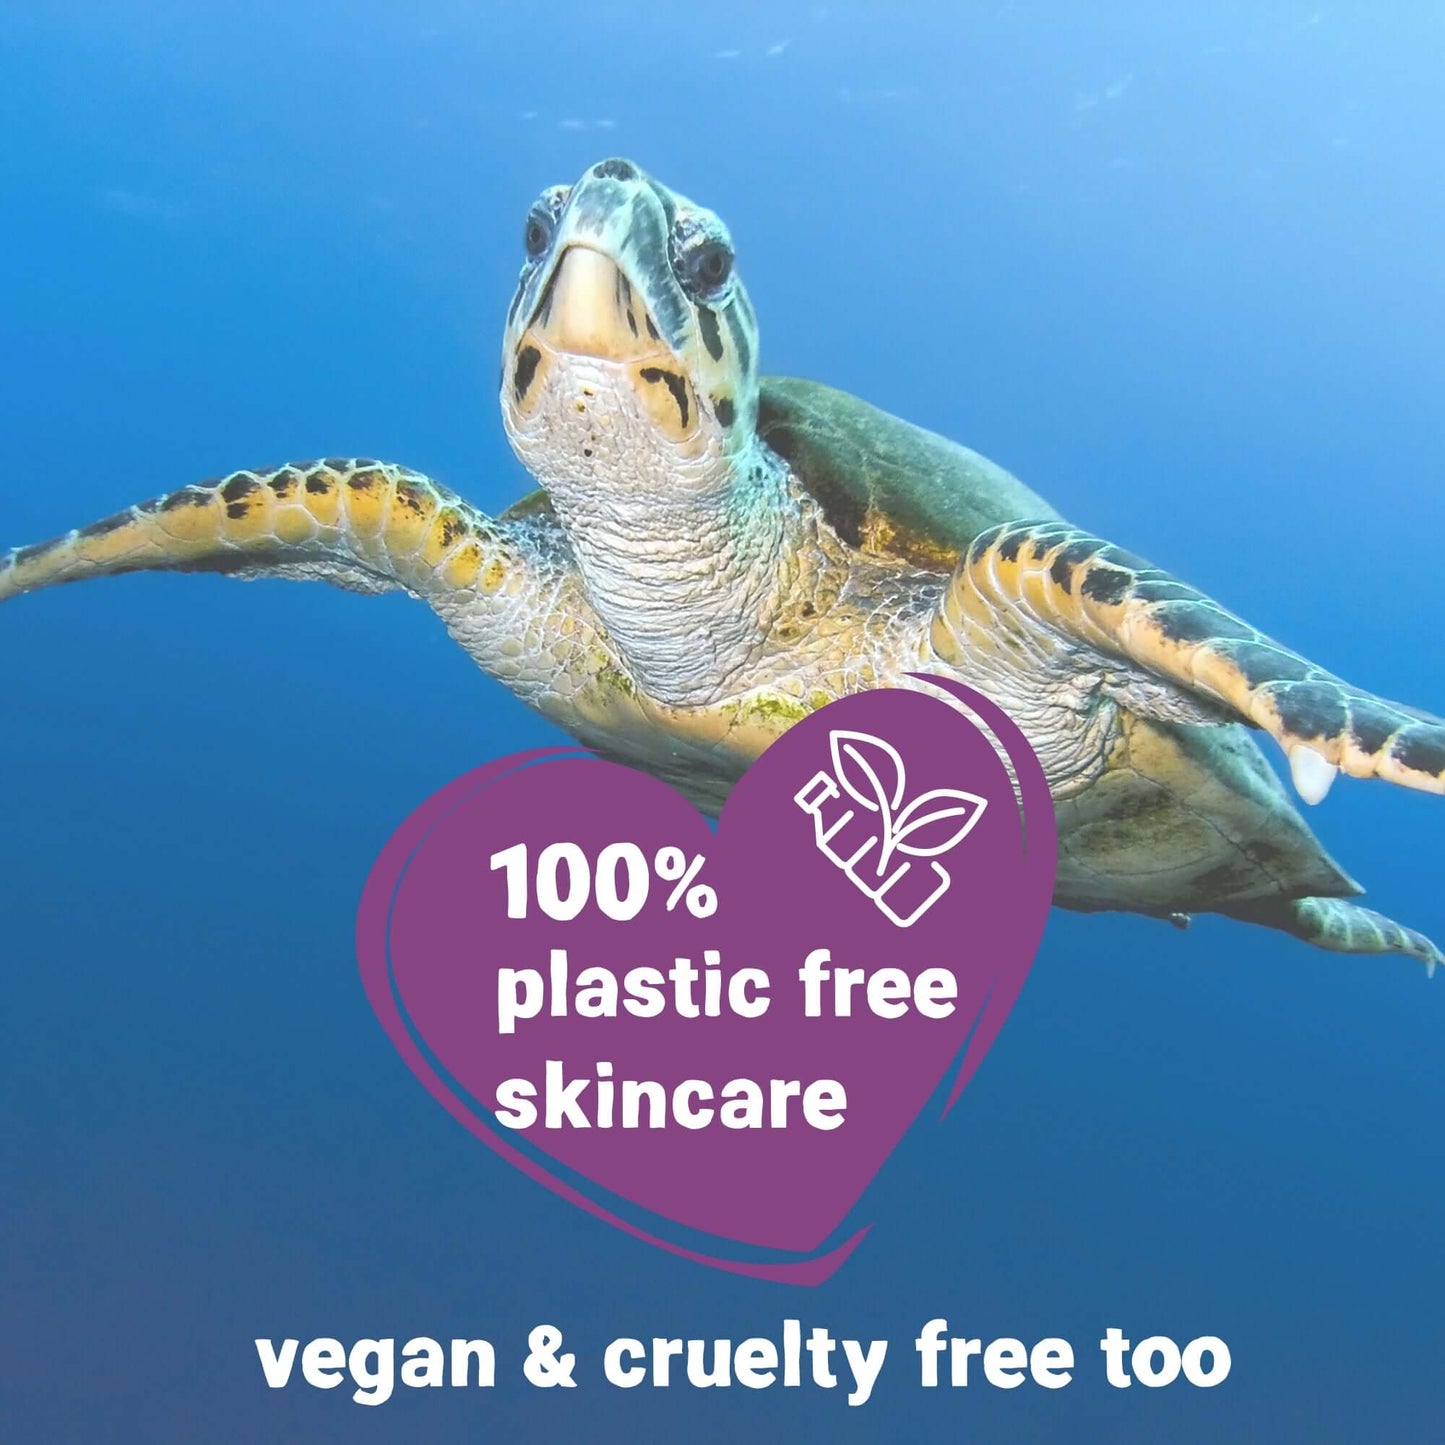 eco-friendly sending love gift that has plastic free, vegan skincare